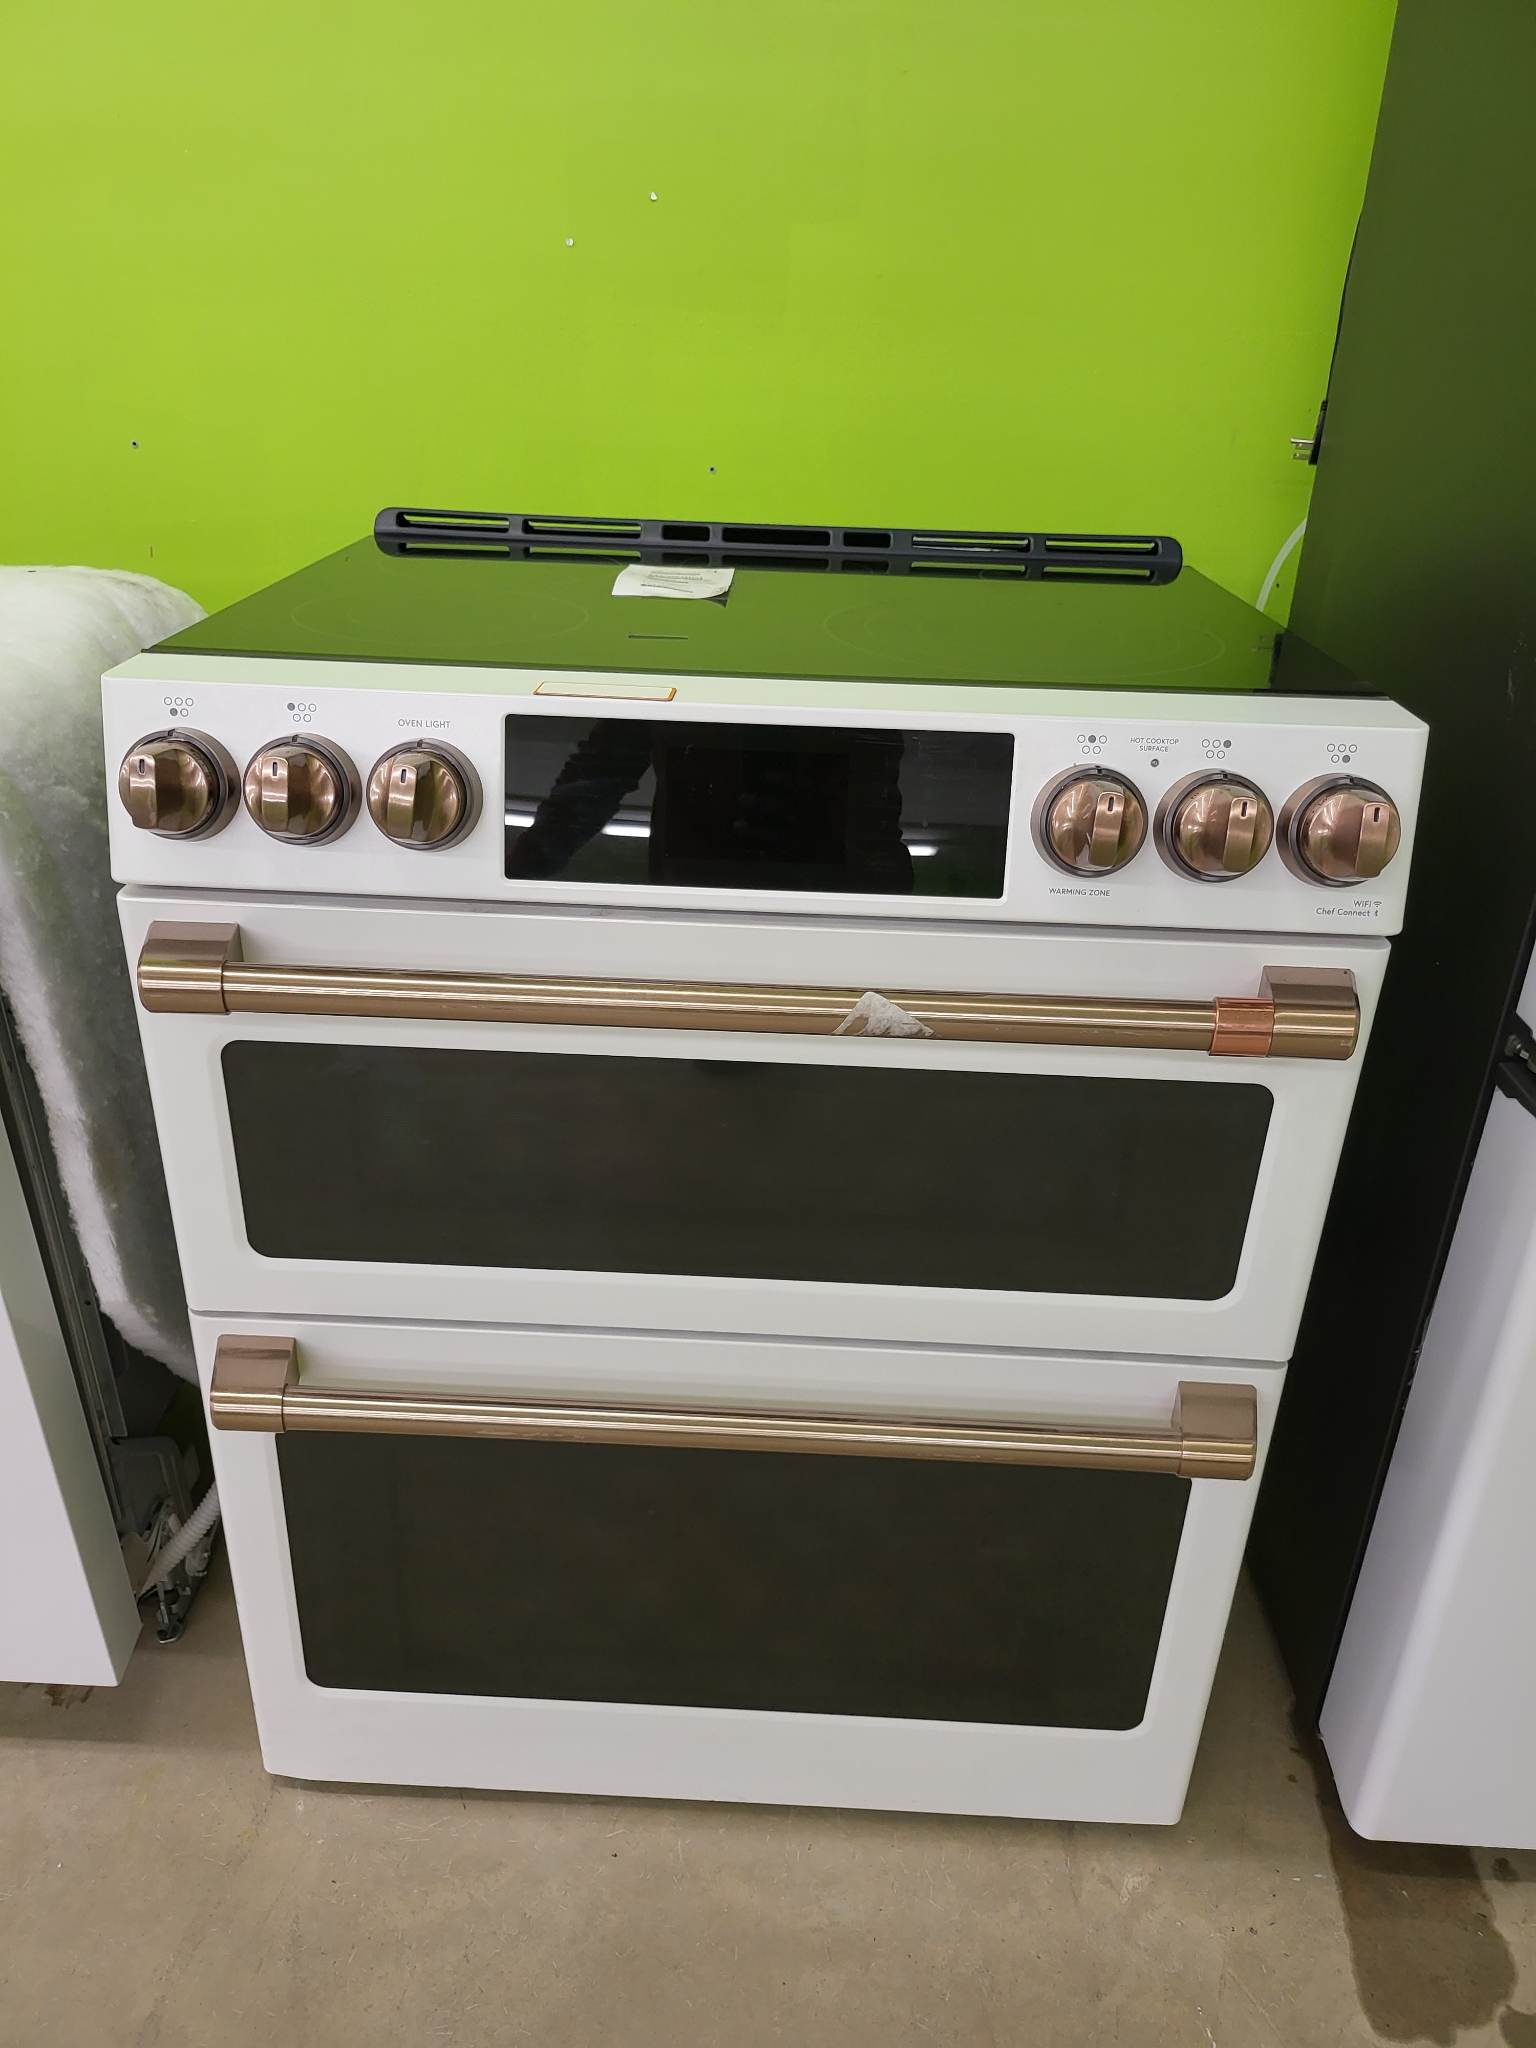 Why Do I Need a Double-Oven Range?